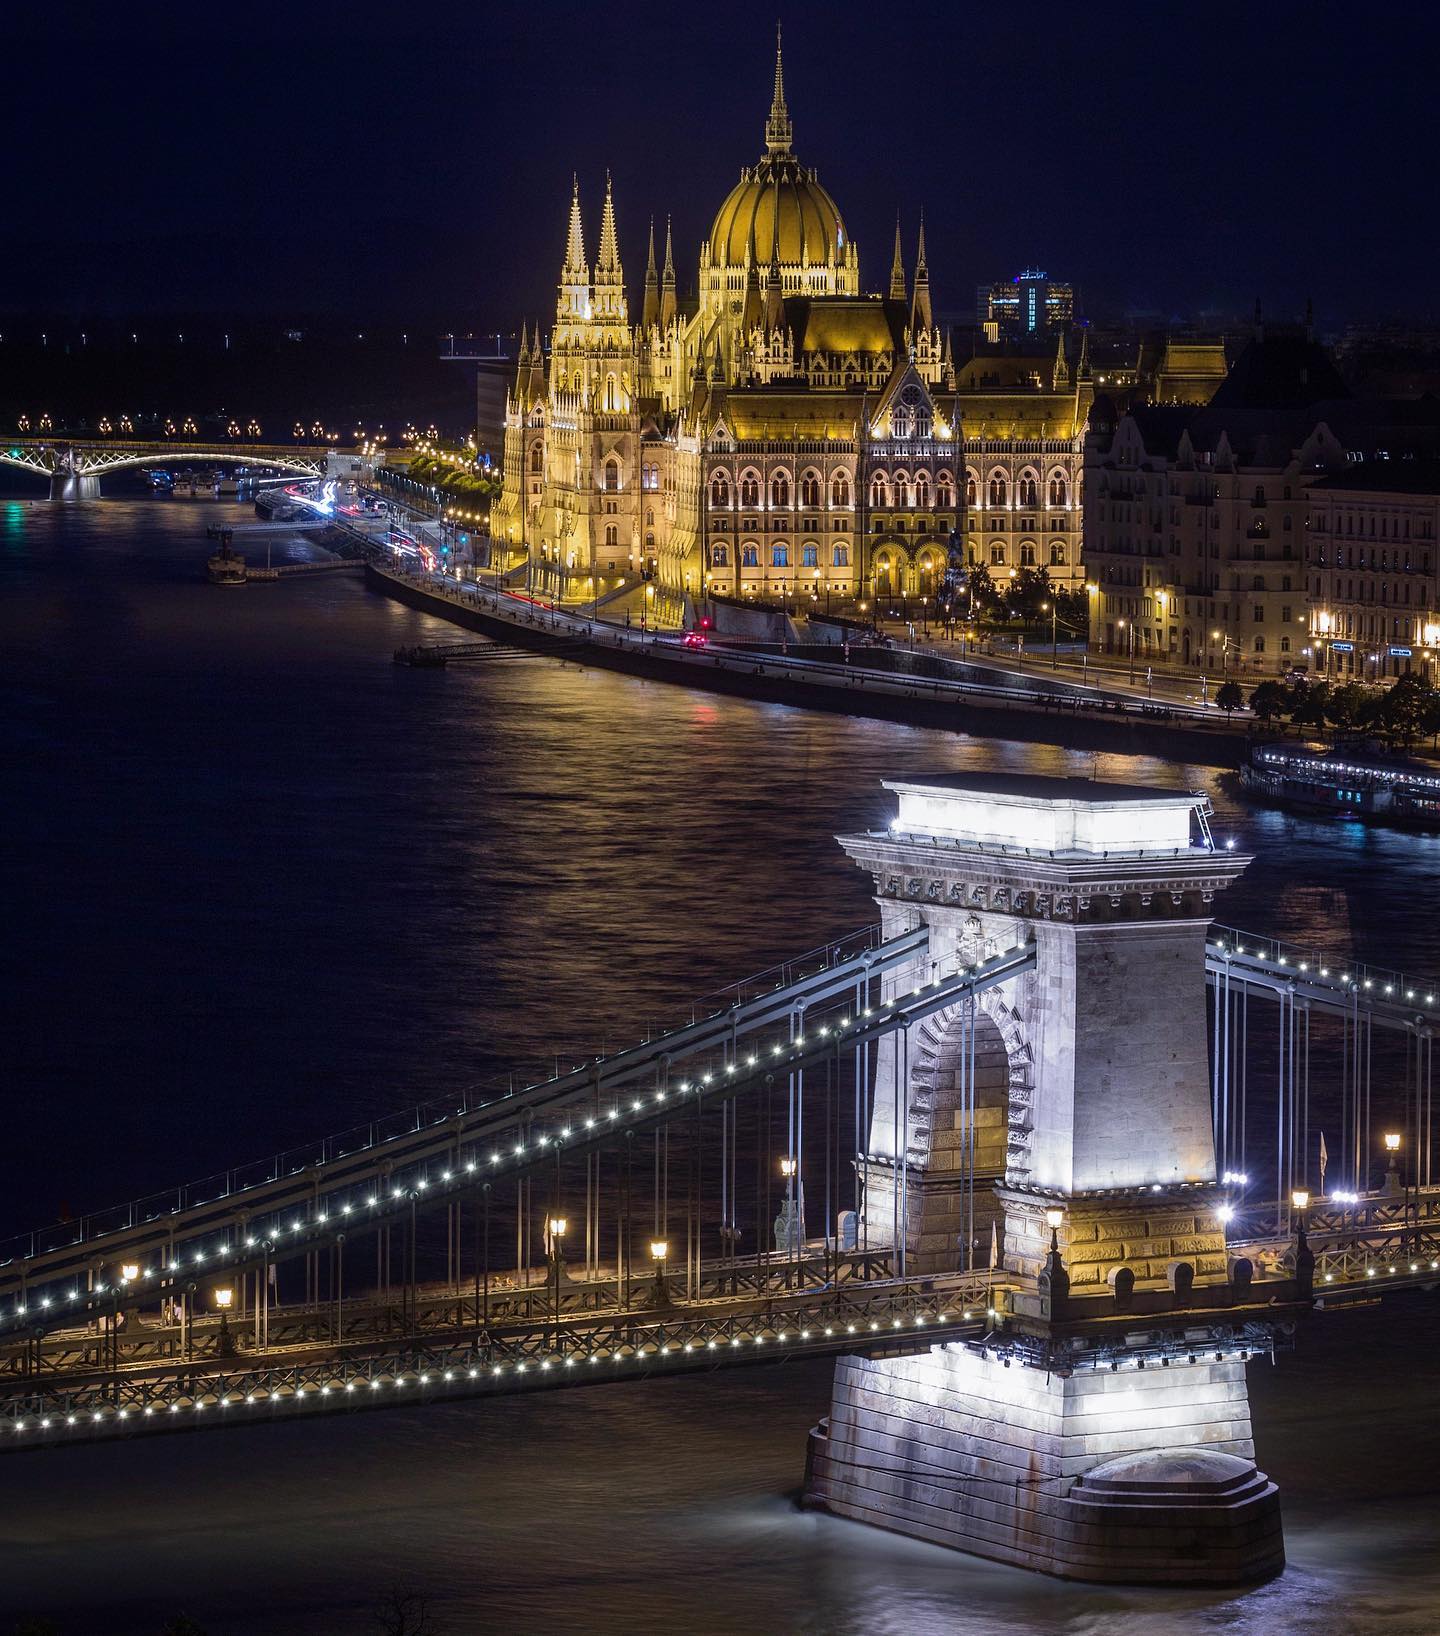 Budapest by night
.
.
#budapest #hungary #szechenyi #szechenyibridge #chainbridge #europe #TopEuropePhoto #pest #night #longexposure #lighttrail #lighttrails #parliament #bridge #pestbynight #wonderful_places #travelblogger #travelling #travelphotography #travelgram #budapesthungary #budapestgram #budapestparliament #parlament #parliamentofbudapest  #bonjourbonvoyage #NIGHTSHOOTERS #budapesttravel #thebestravelgetaway #rsa_night